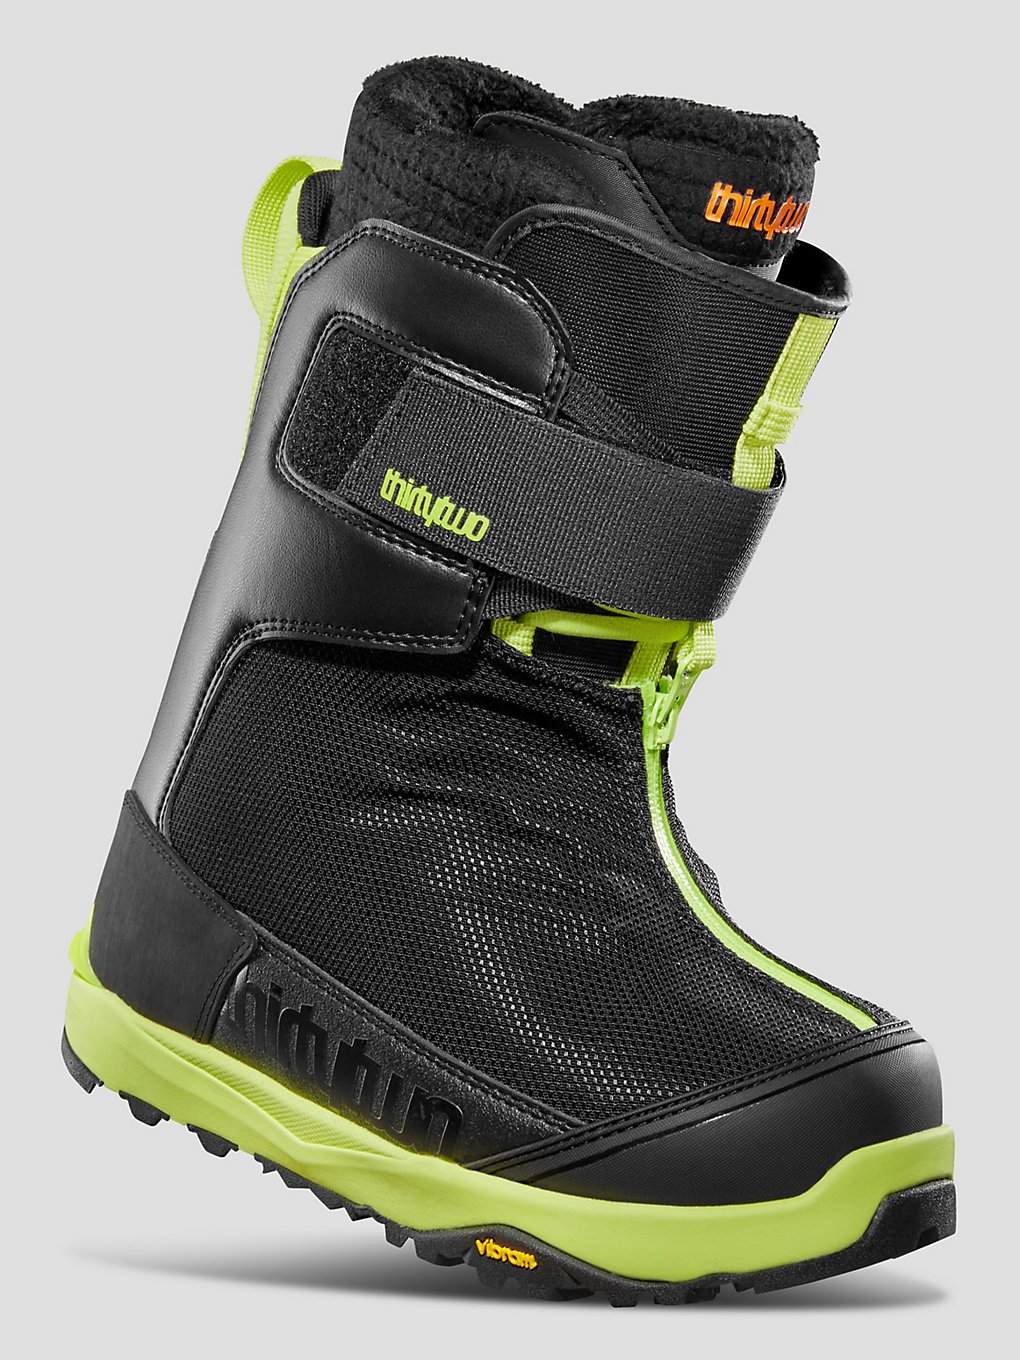 ThirtyTwo TM 2 Hight Snowboard Boots lime kaufen